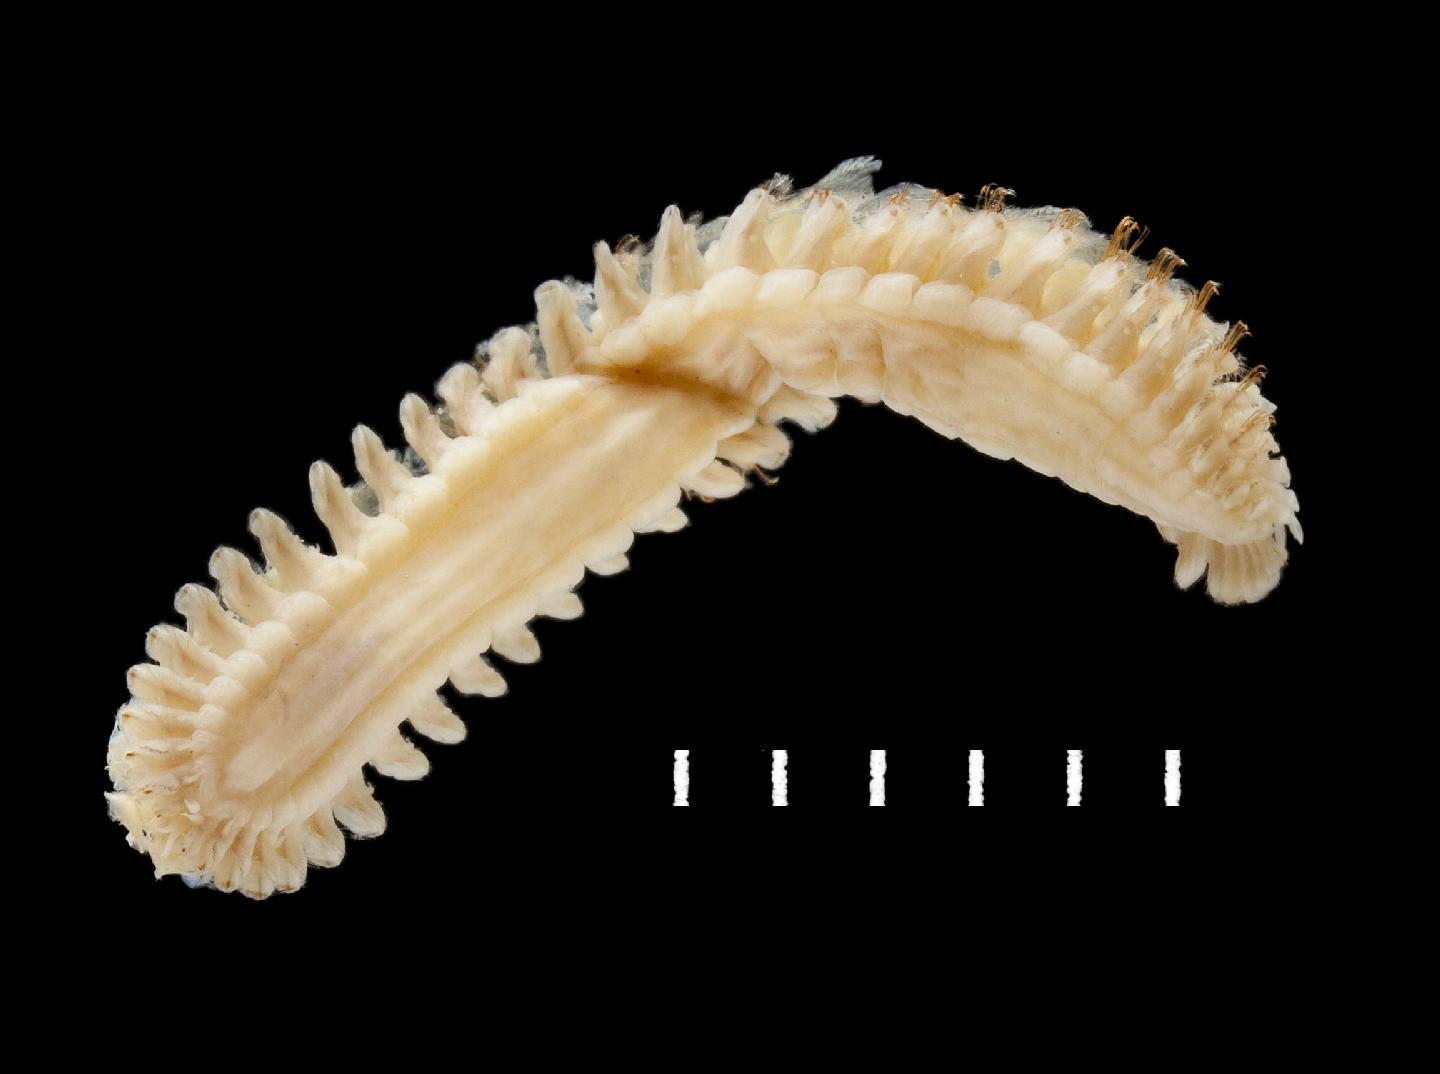 To NHMUK collection (Grubeulepis tebblei Pettibone, 1969; paratype; NHMUK:ecatalogue:3537068)